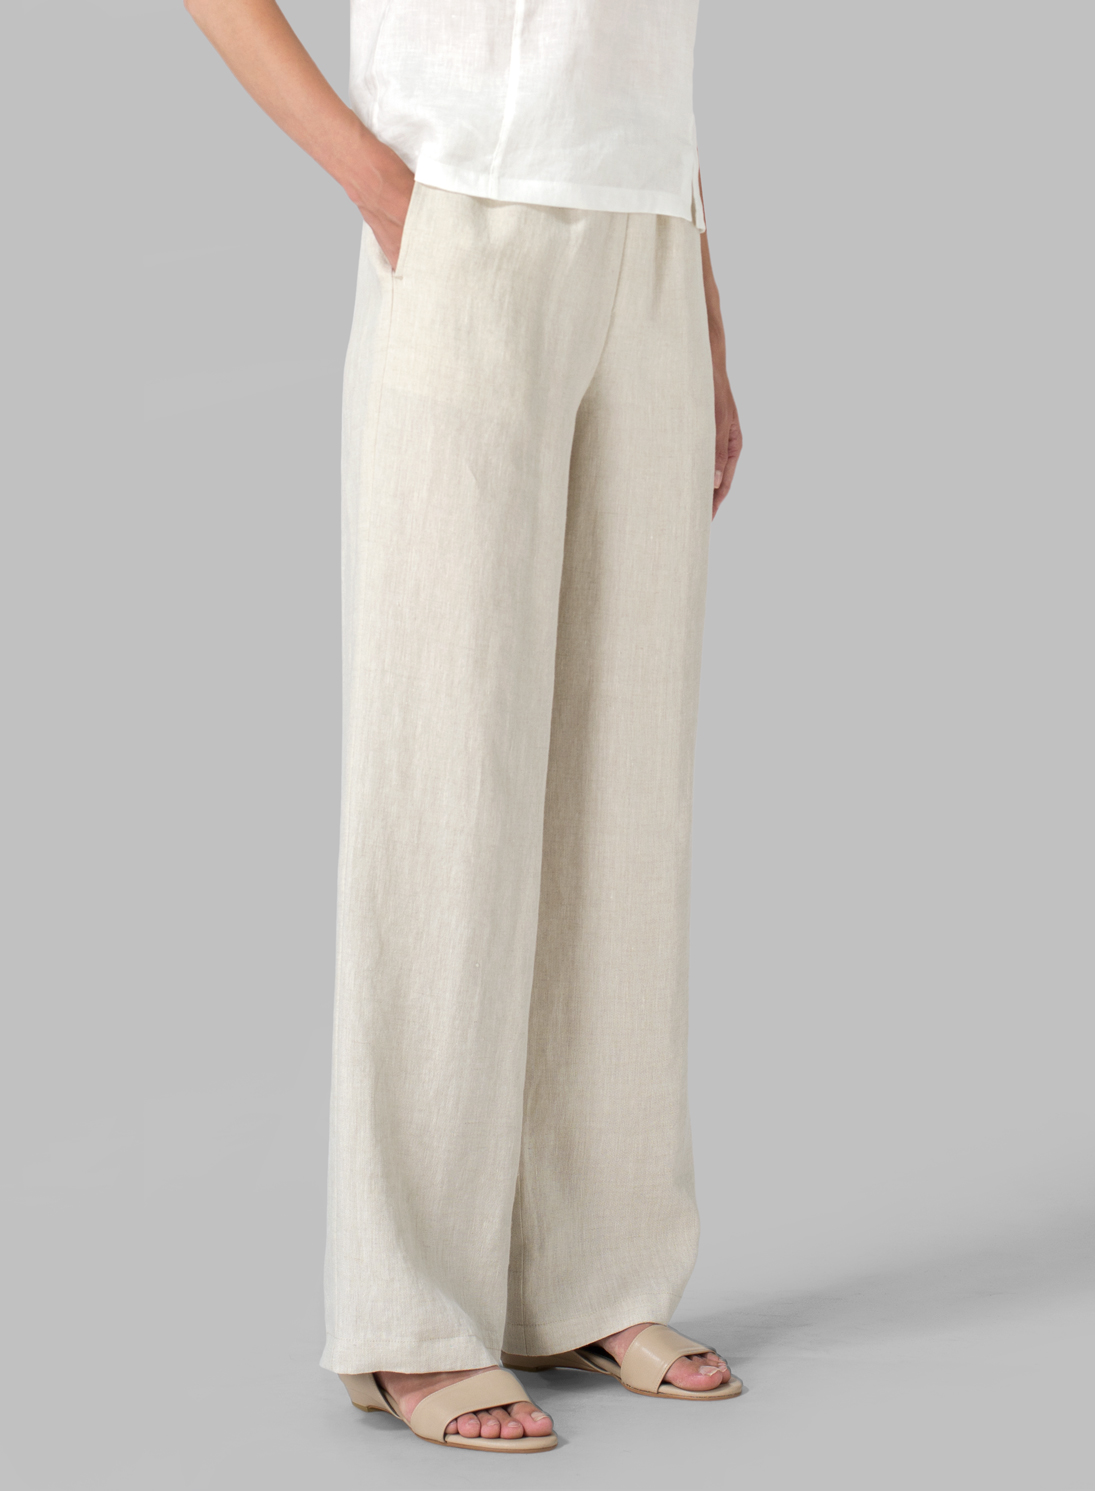 Linen Casual Extra Long Pants